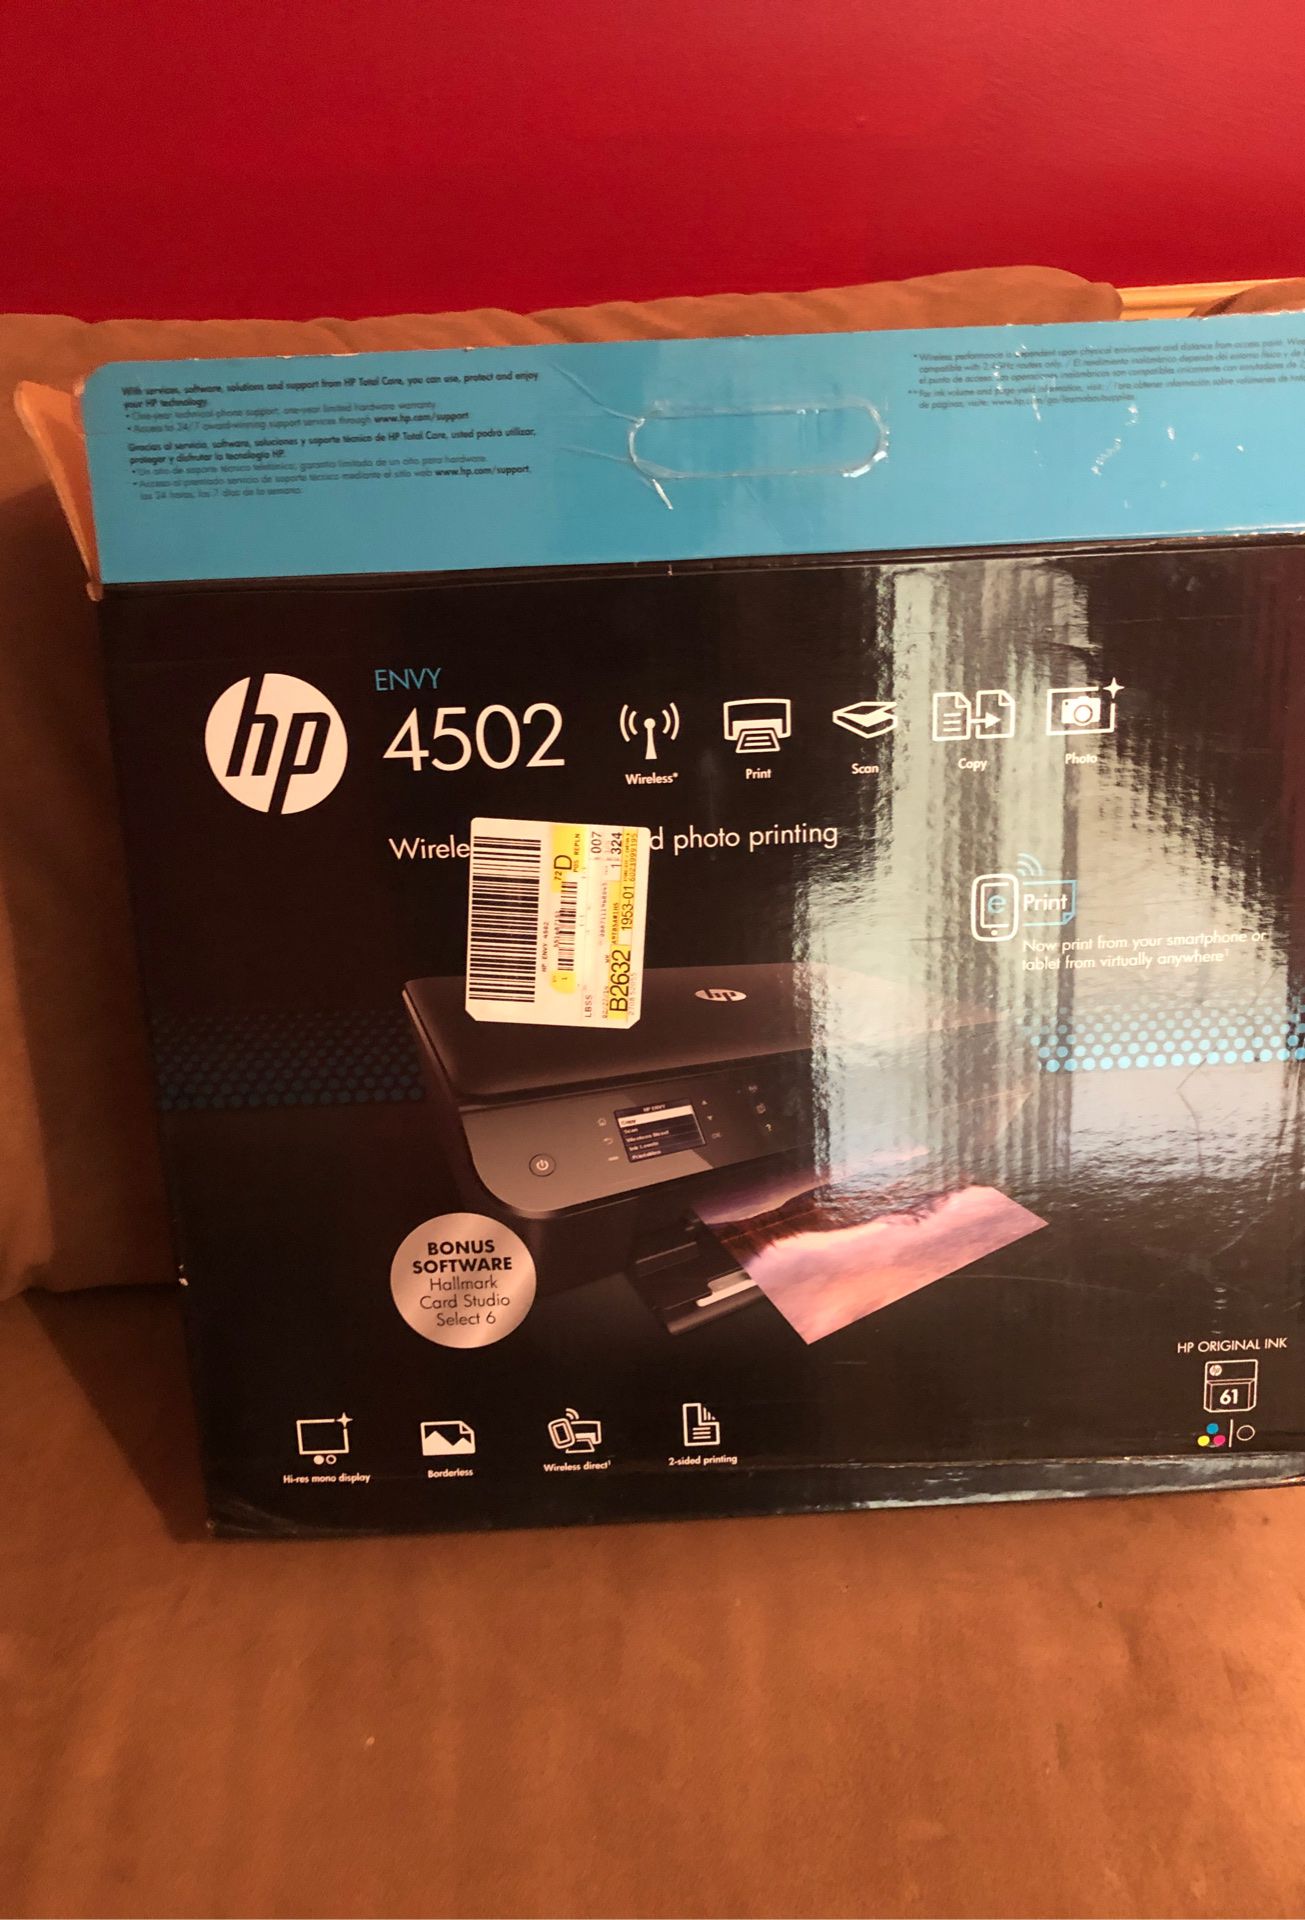 HP Envy 4502 wireless printer